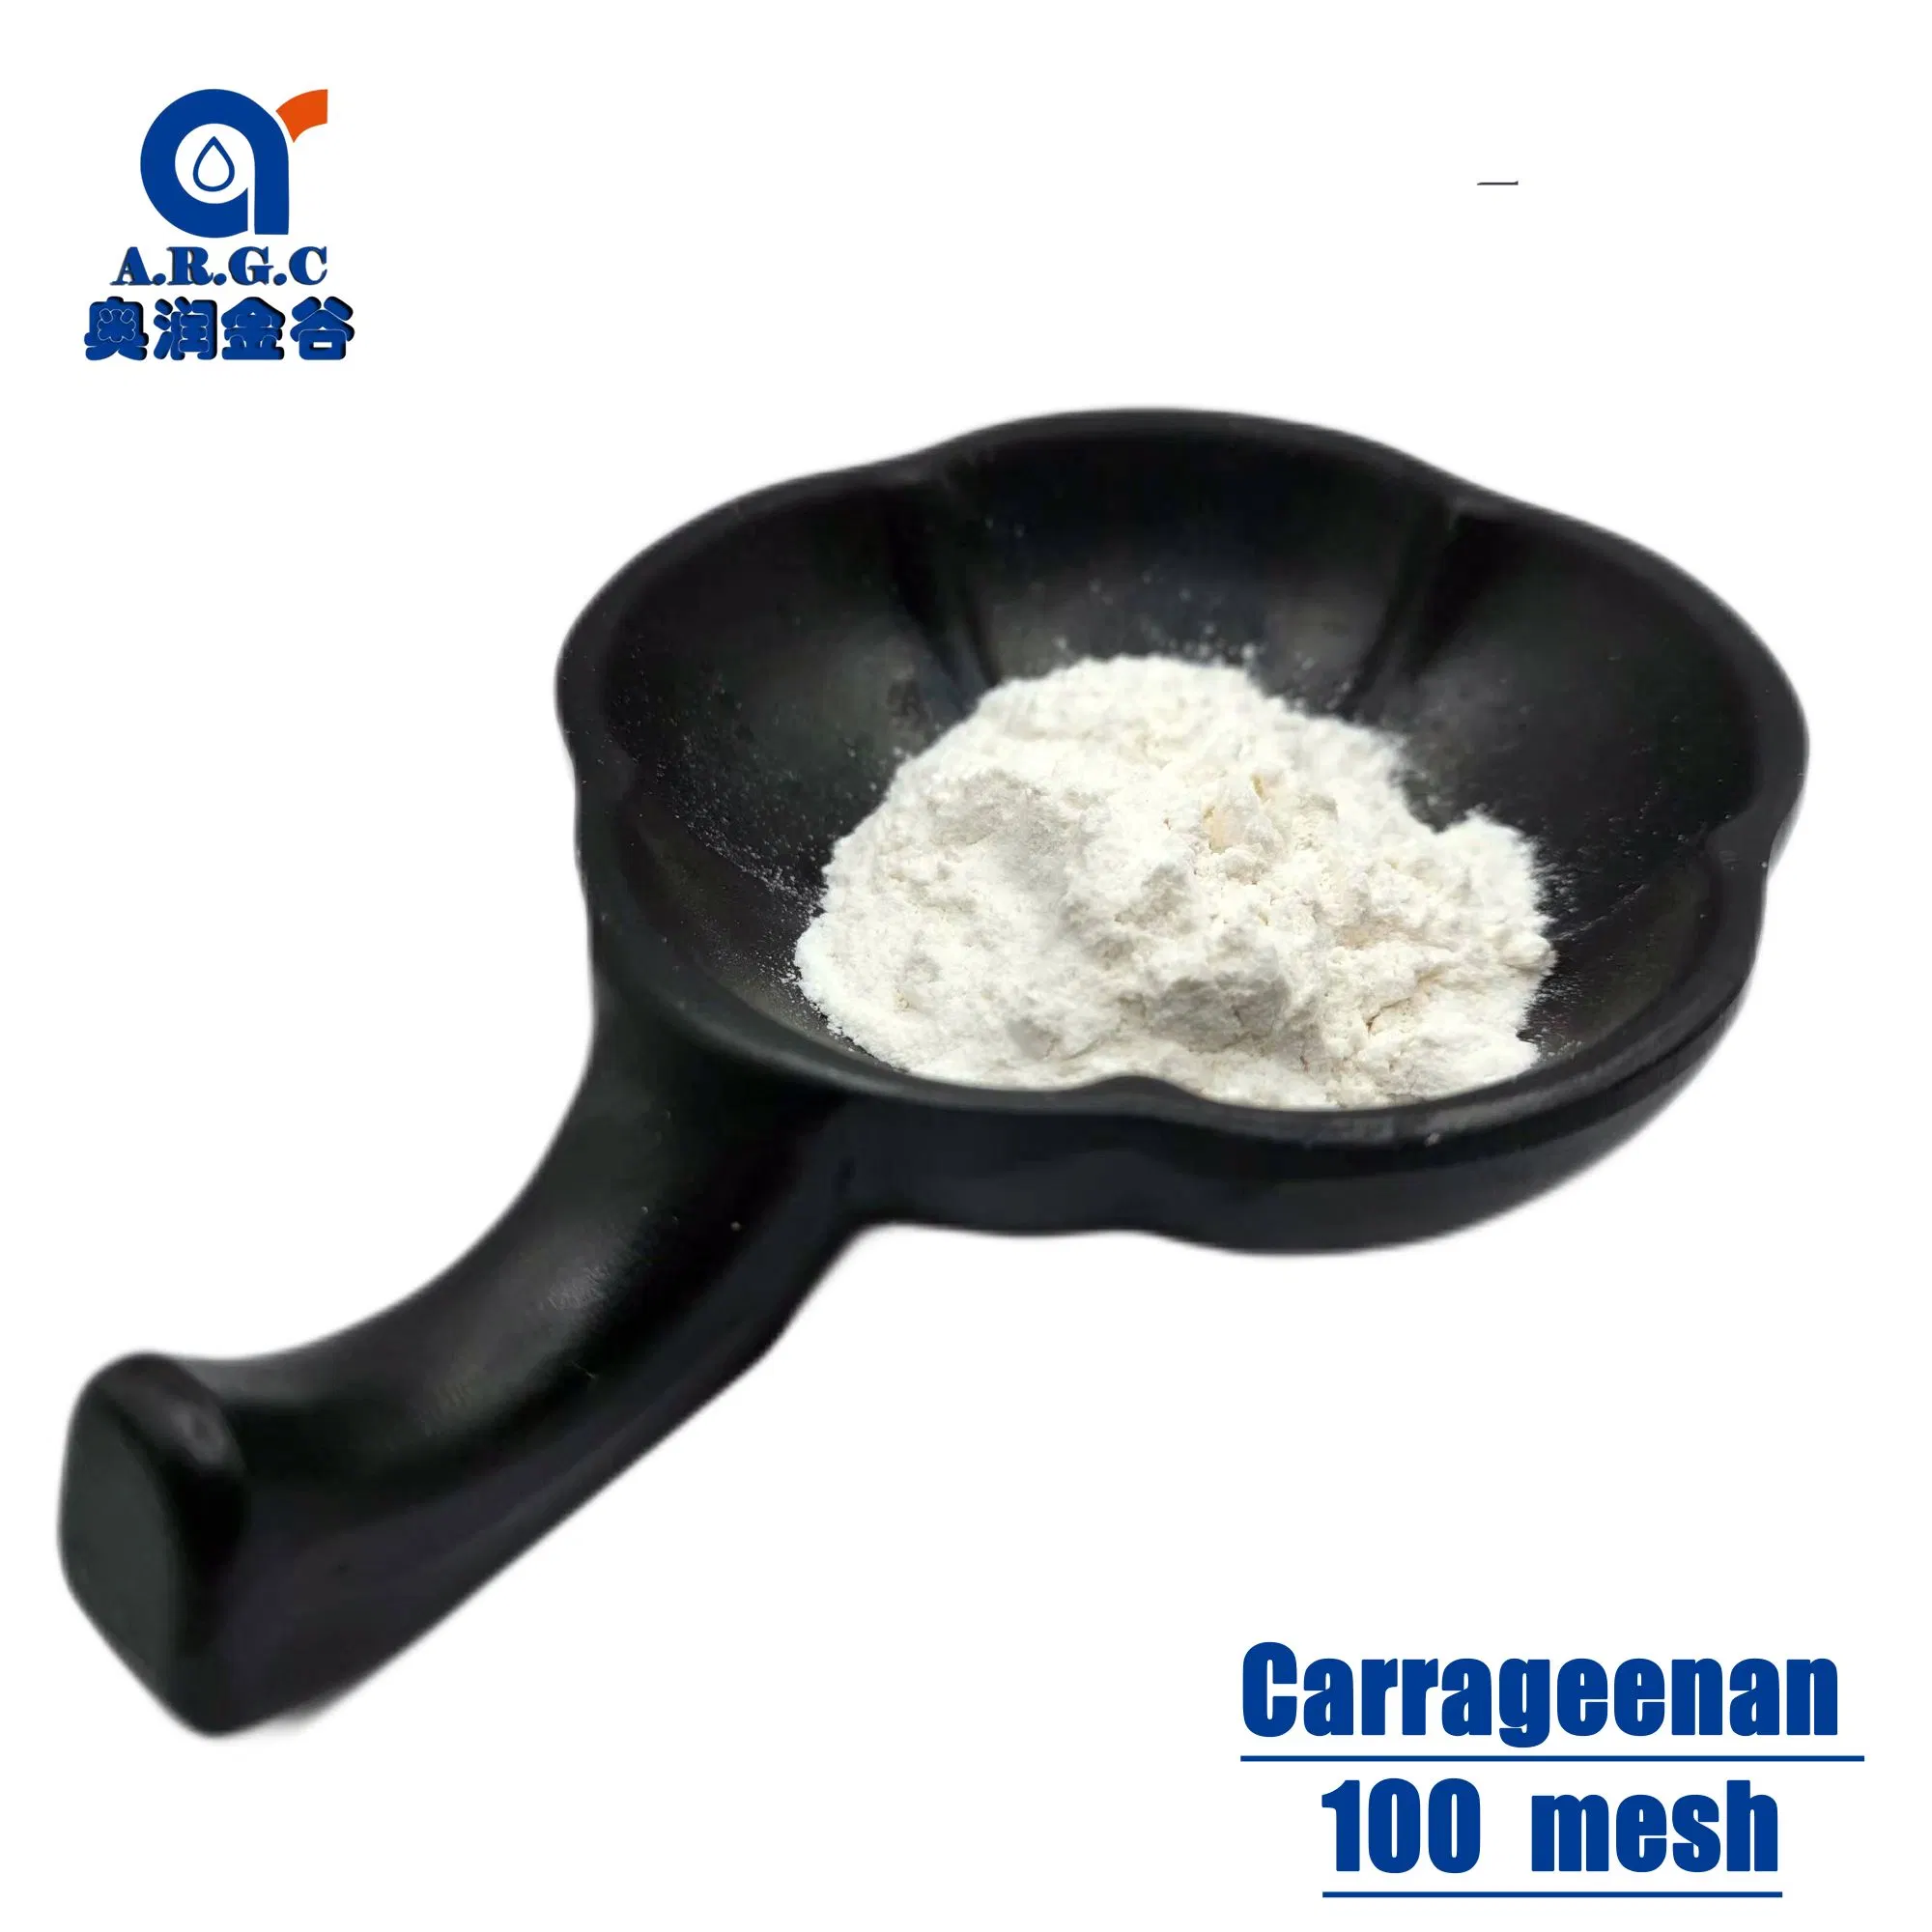 Superior Material Carrageenan Jelly Powder High Purity Lambda Carrageenan Powder